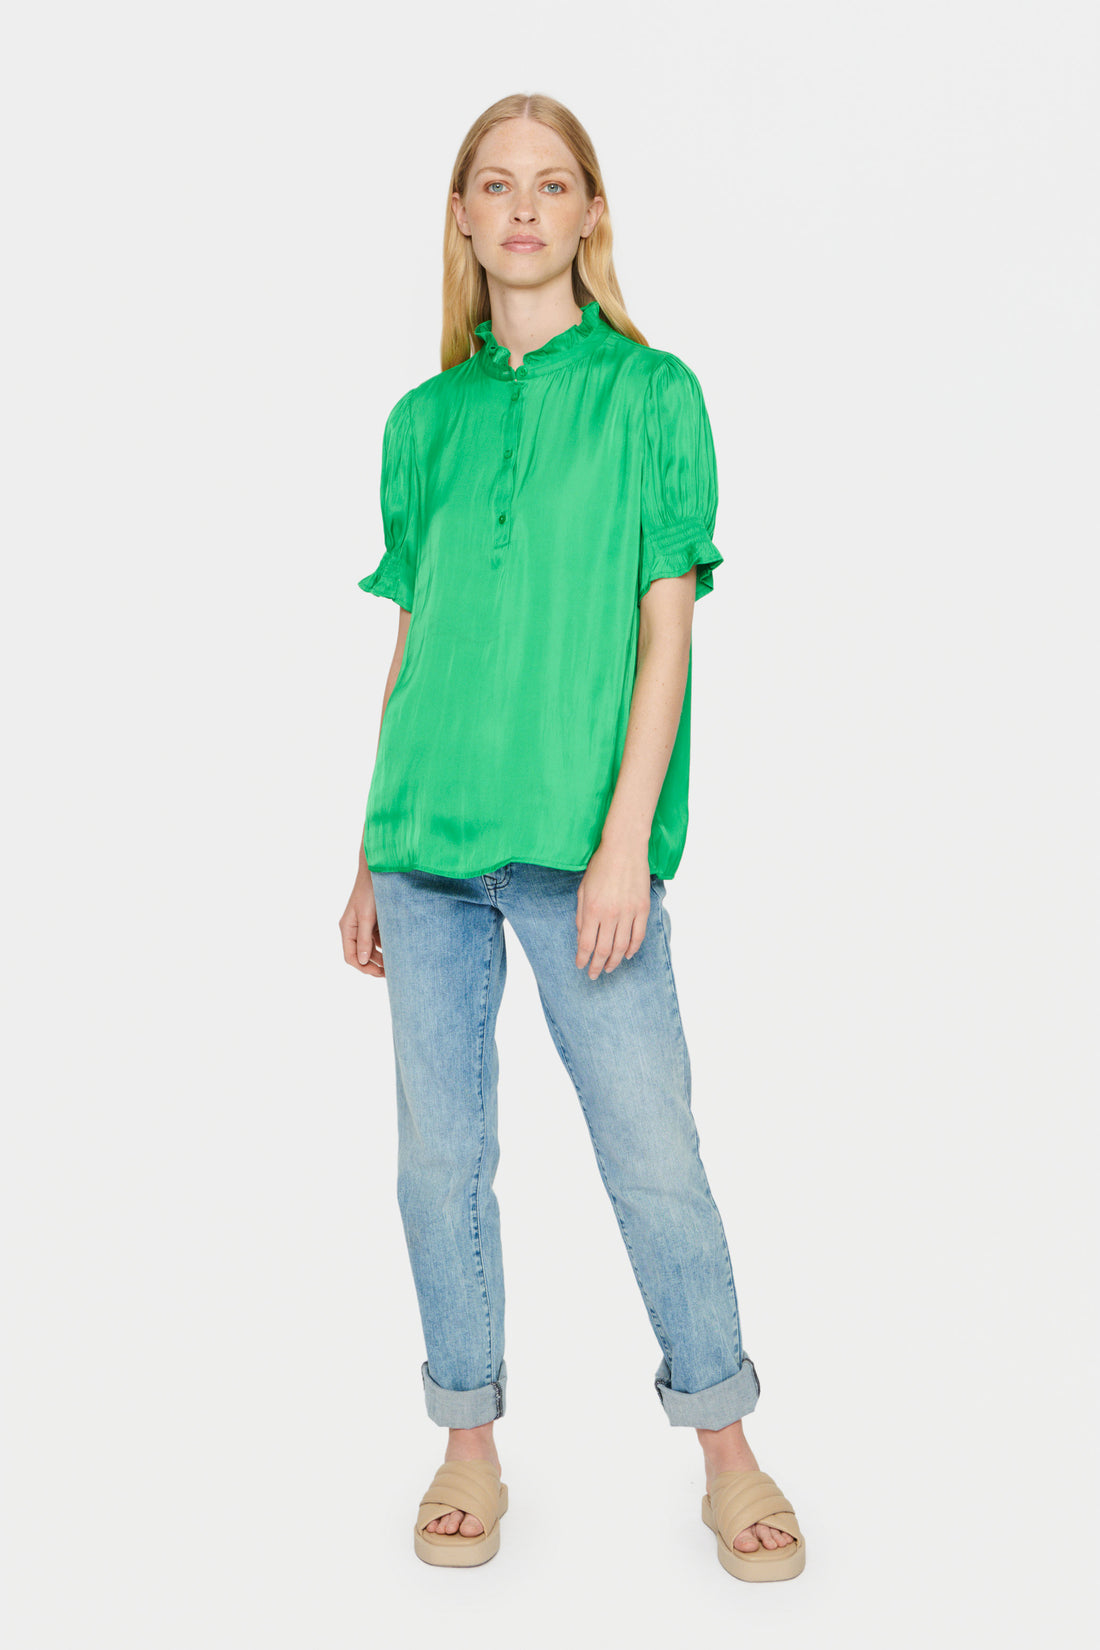 Saint Tropez Veeni Shirt in Bright Green